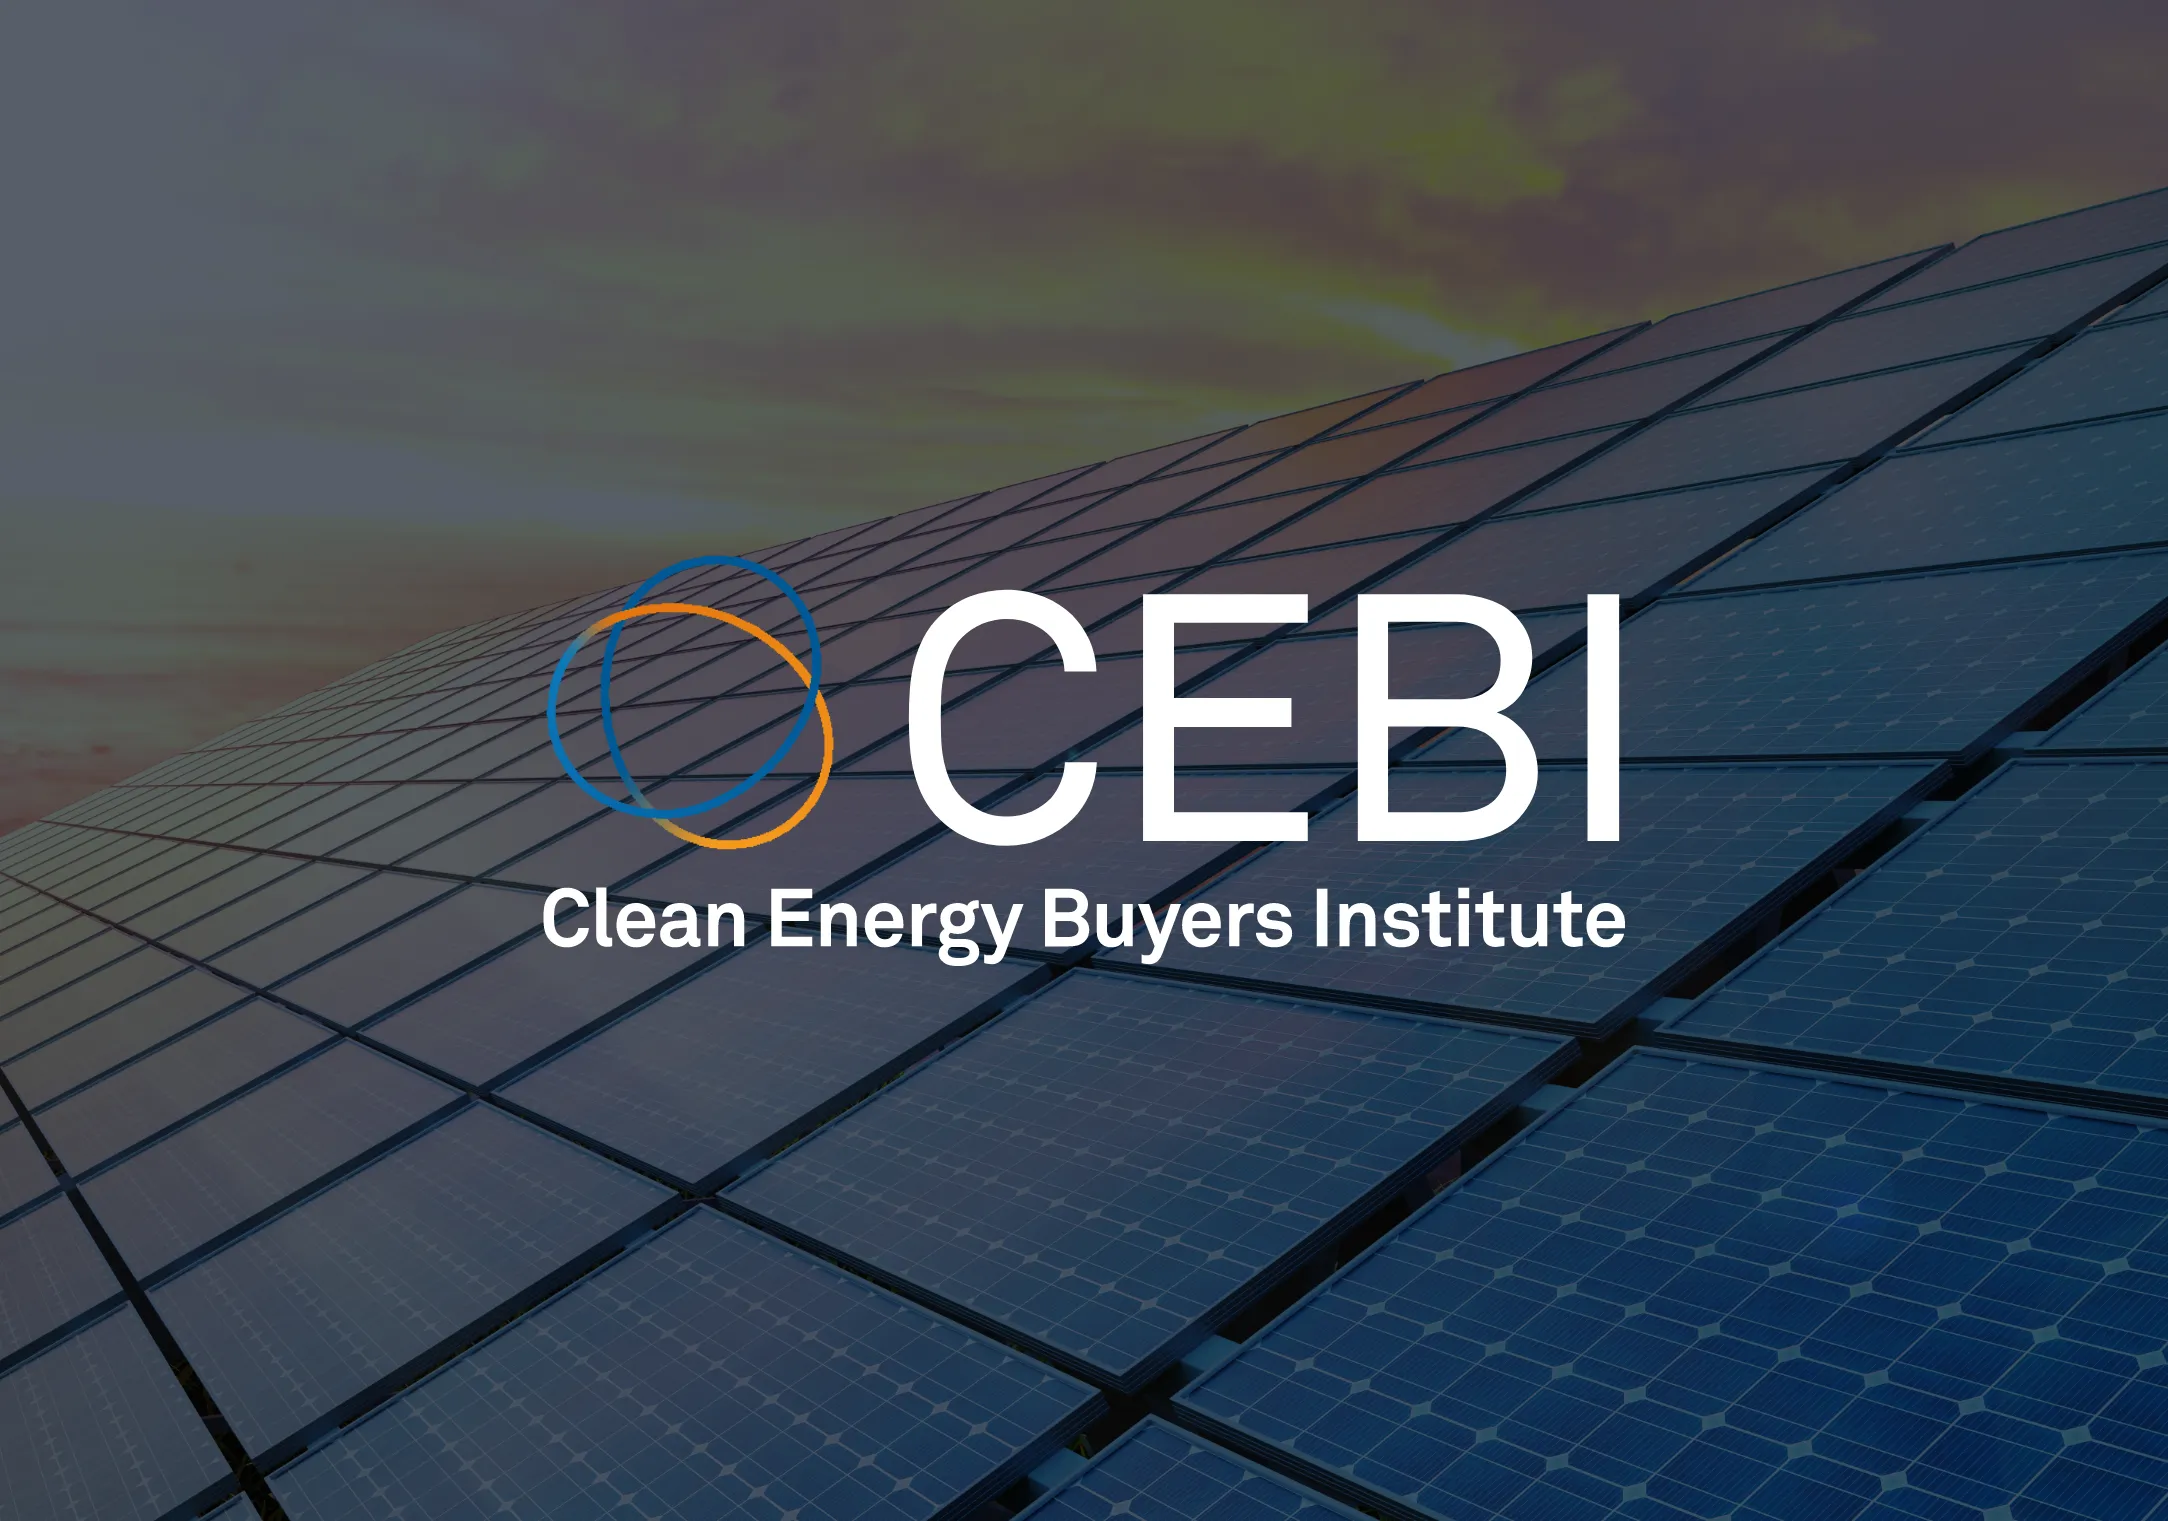 CEBI. Clean Energy Buyers Institute.